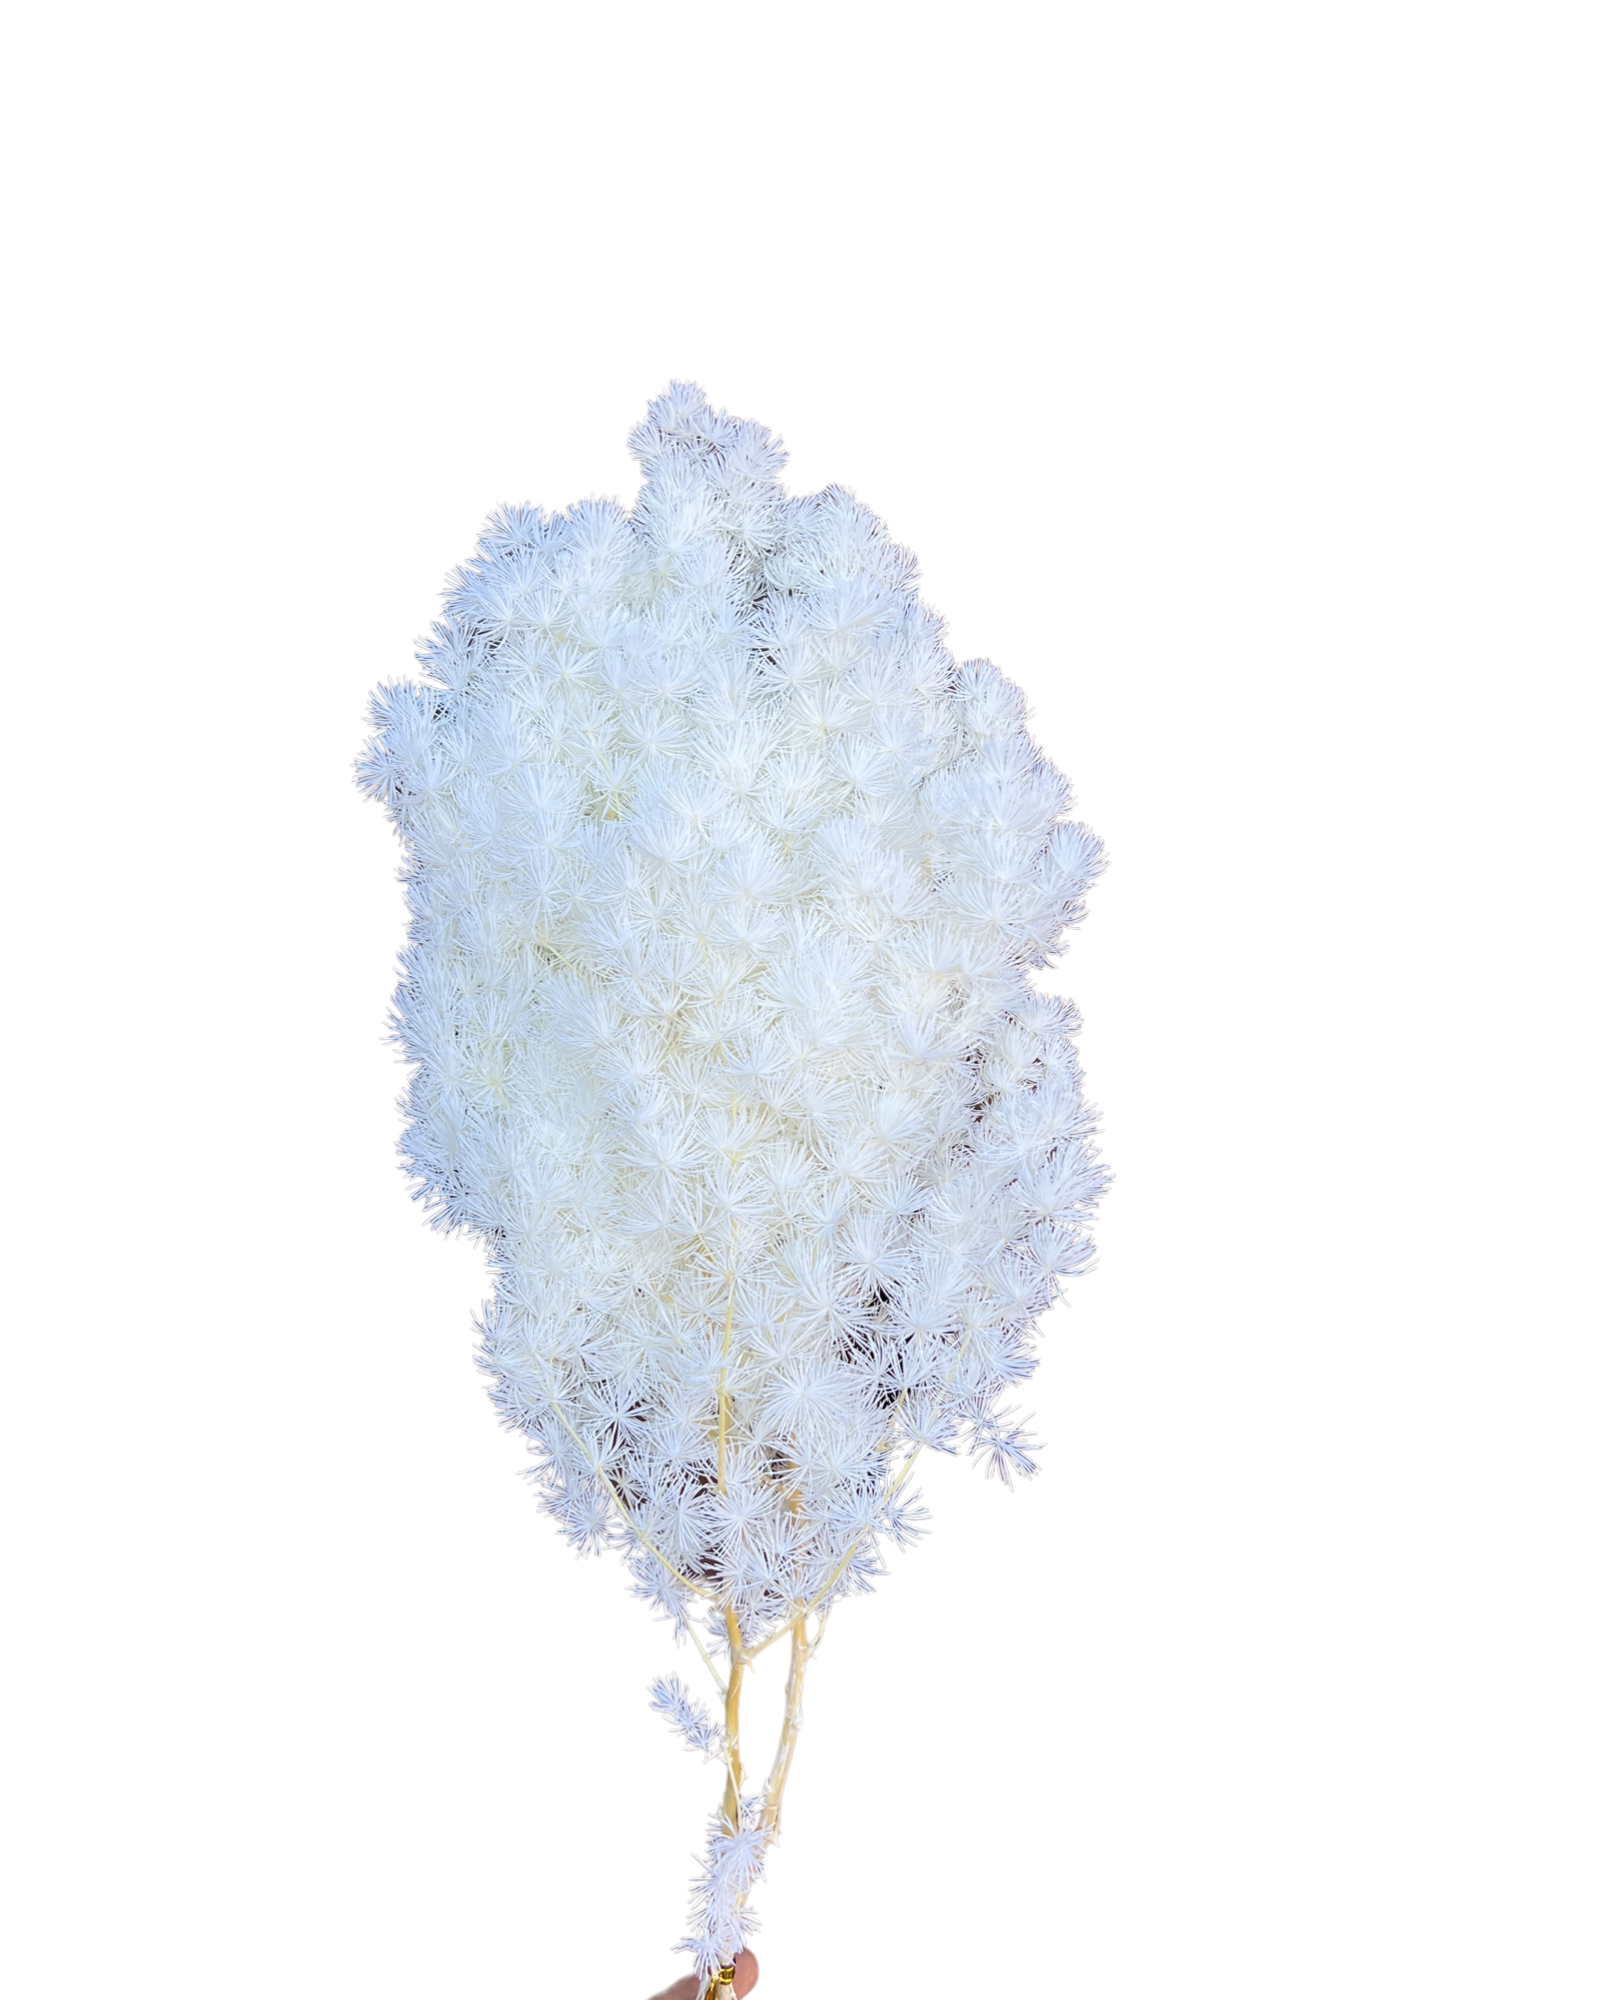 Ming fern(ASPARAGUS MYRIOCLADUS) - White (pure)